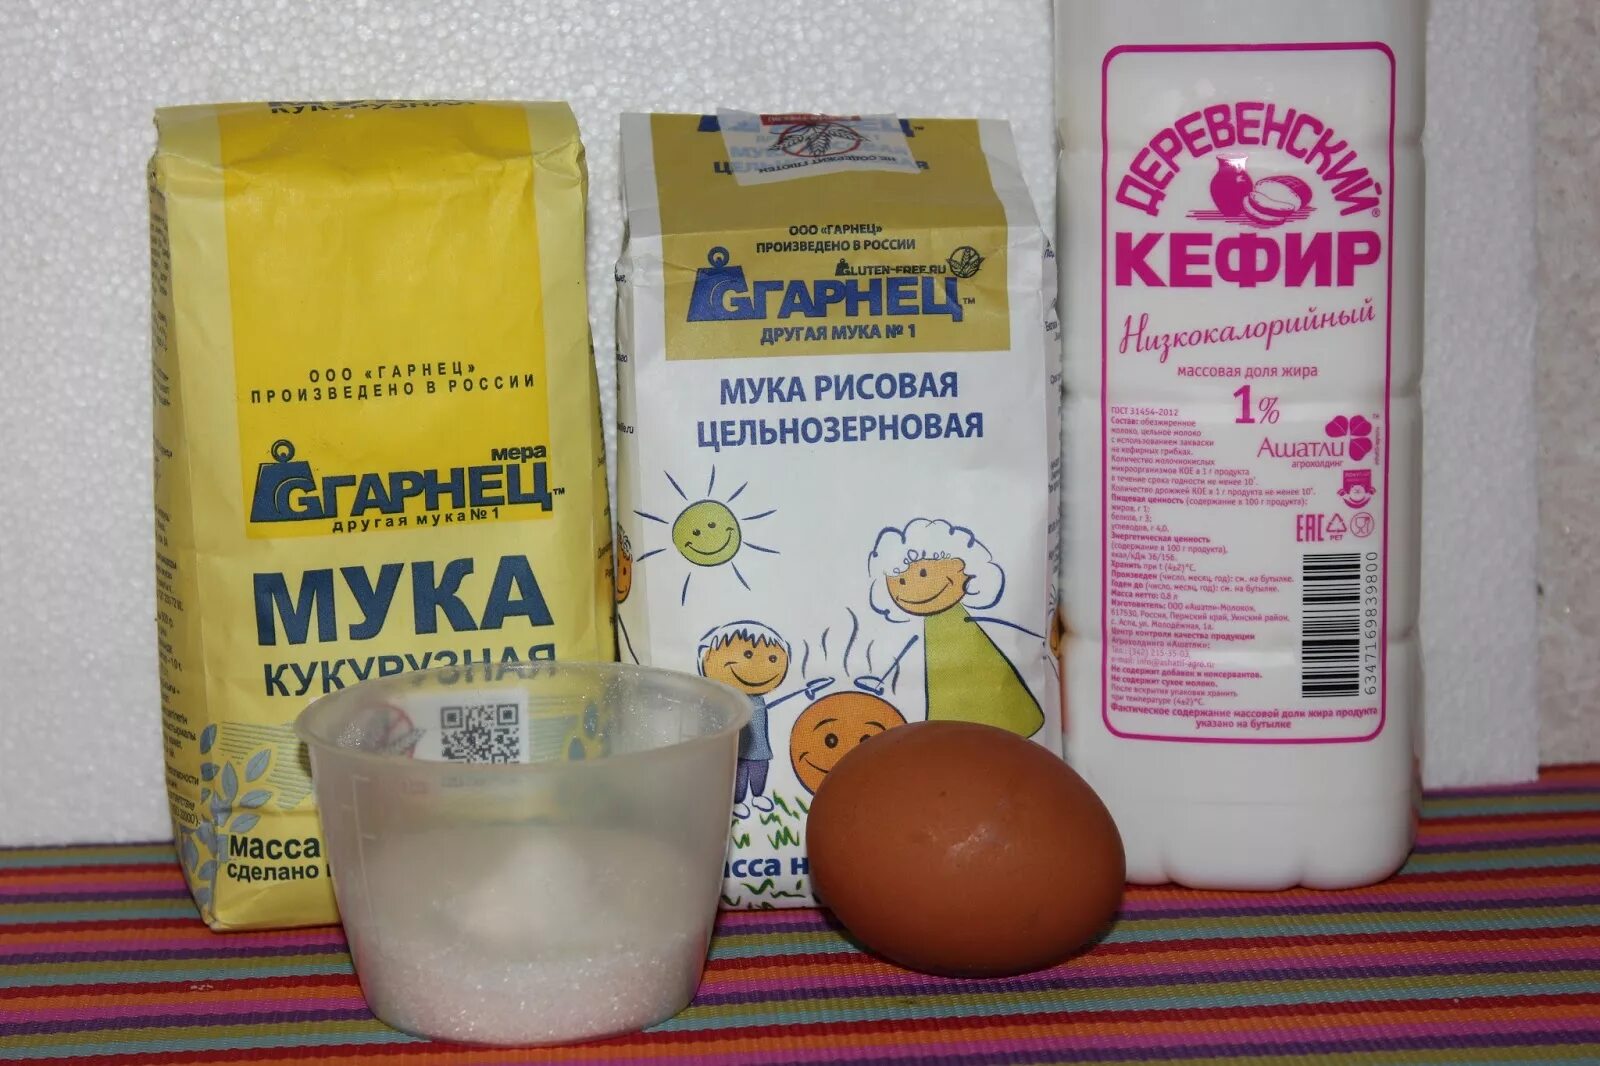 Кефир сахар мука рецепт. Кефир и мука. Кефир сахар сода мука яйцо. Кефир яйцо мука соль. Рисовая мука и кефир.